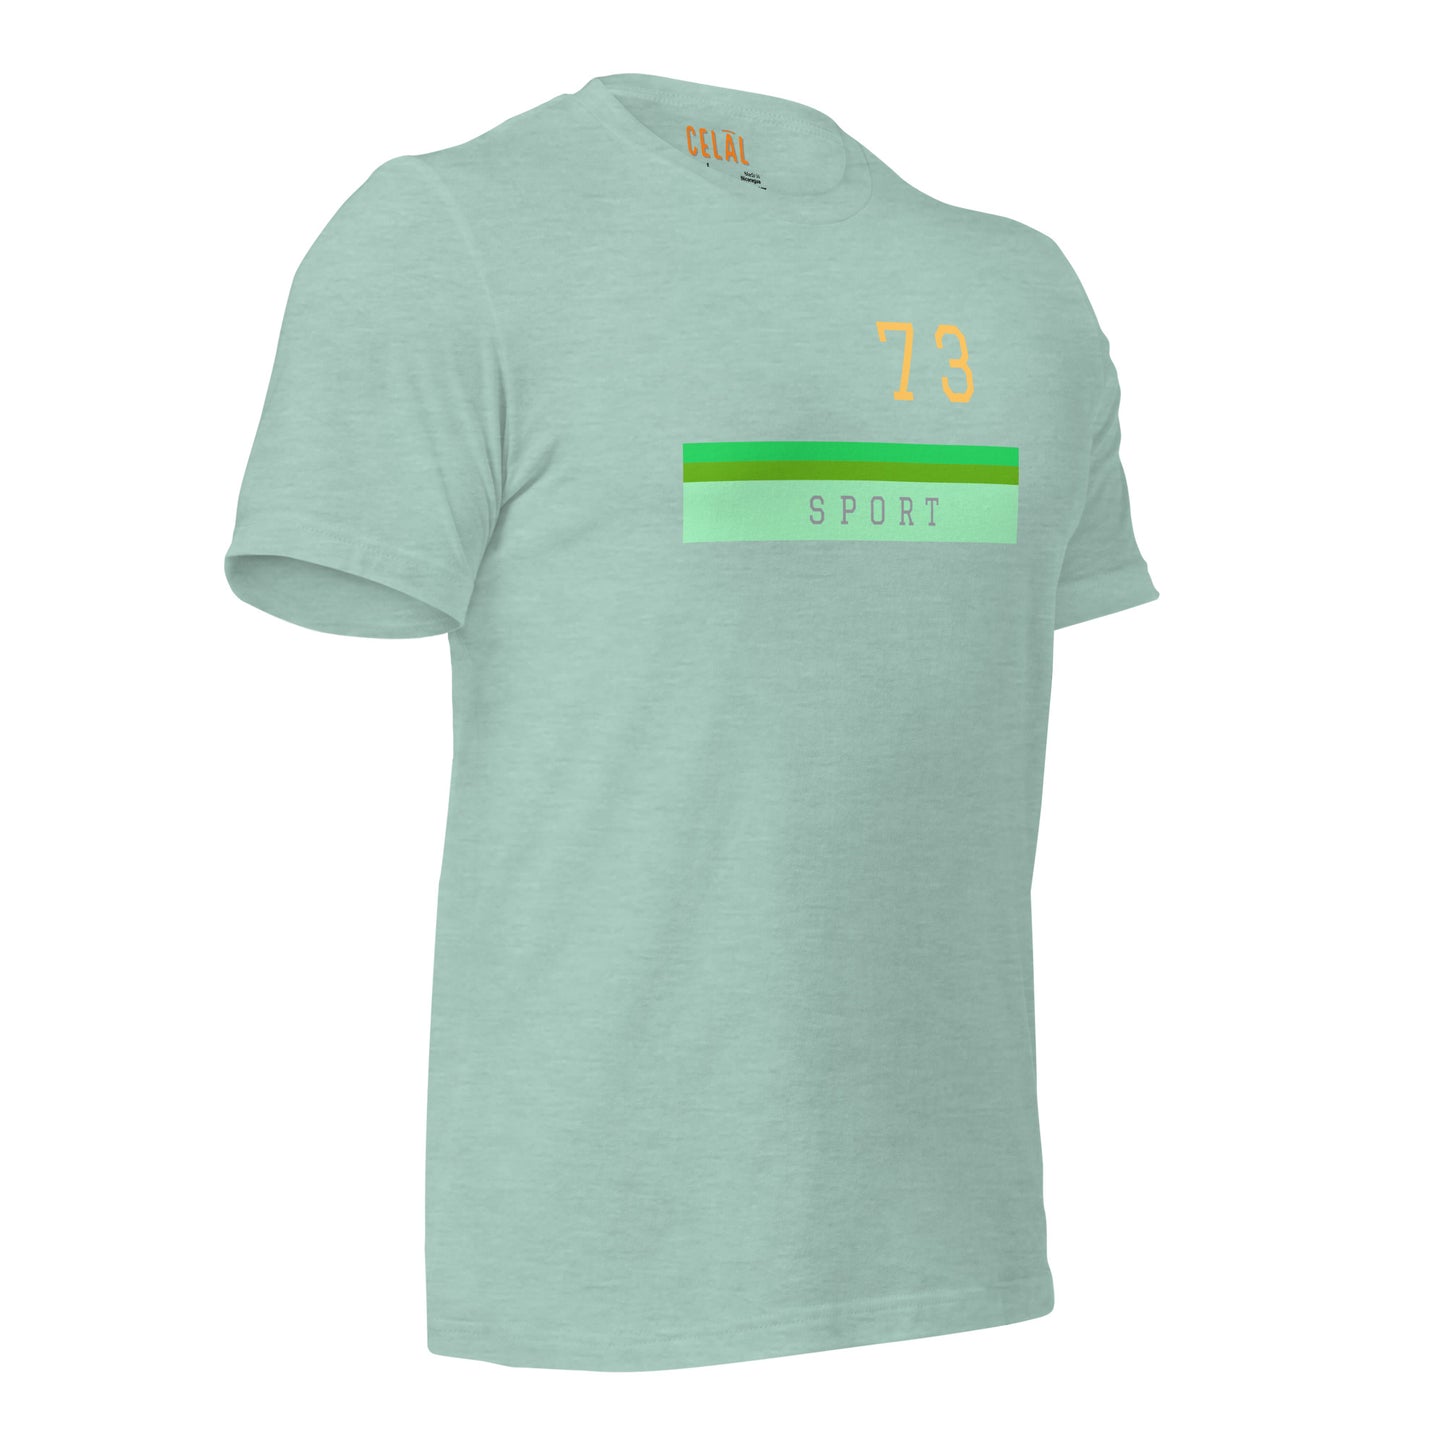 73 Unisex t-shirt